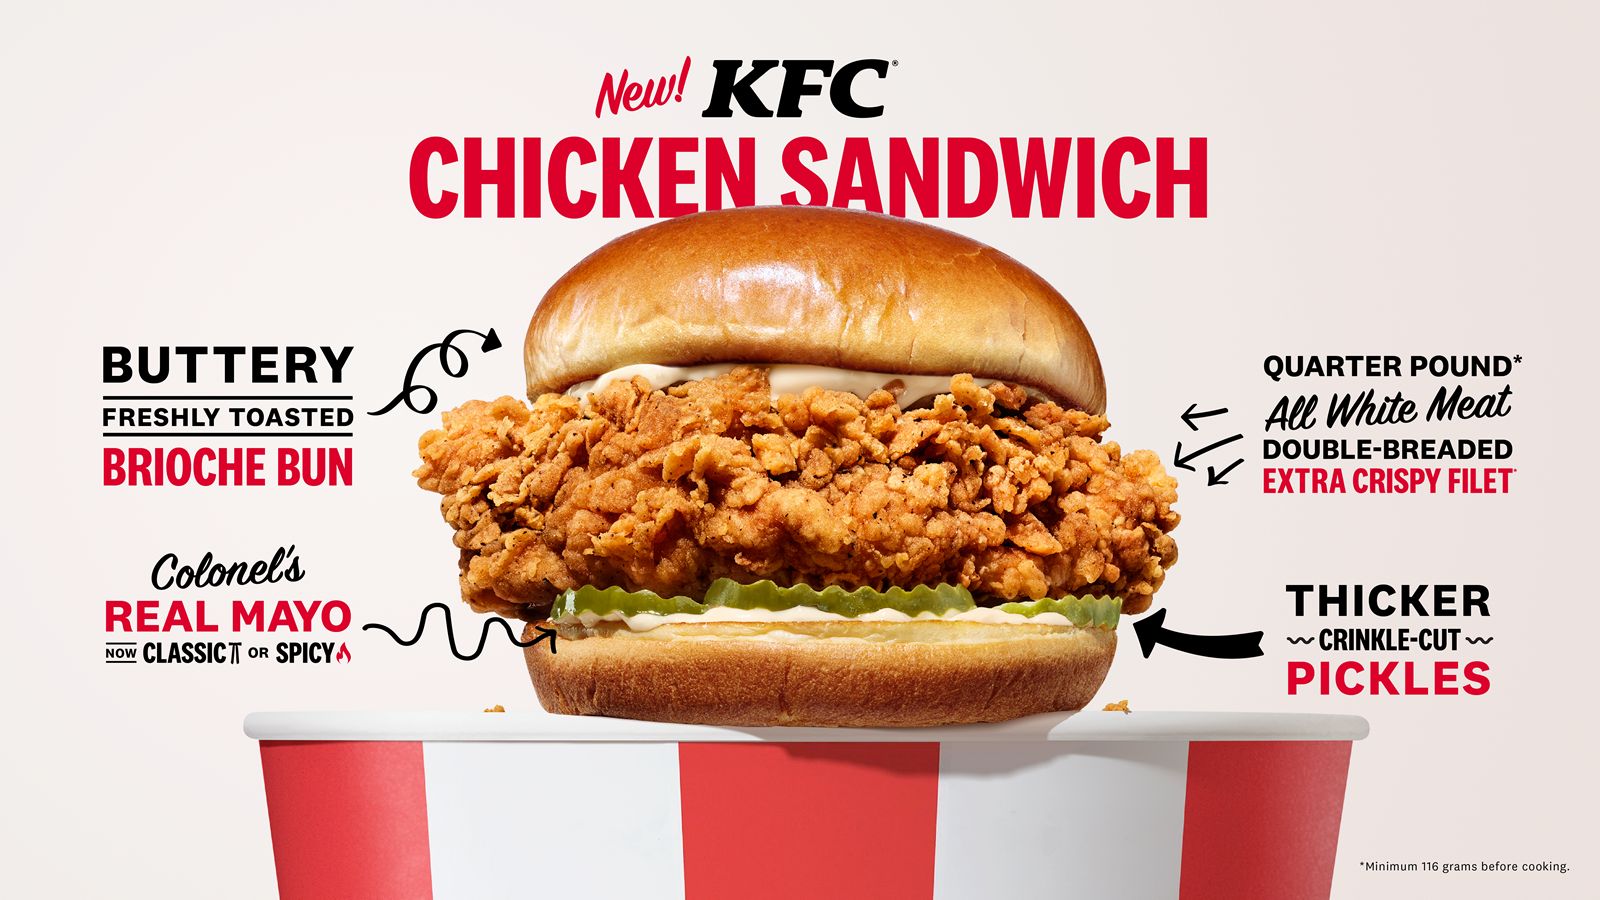 KFC Introduces Its Best Chicken Sandwich Ever | RestaurantNewsRelease.com